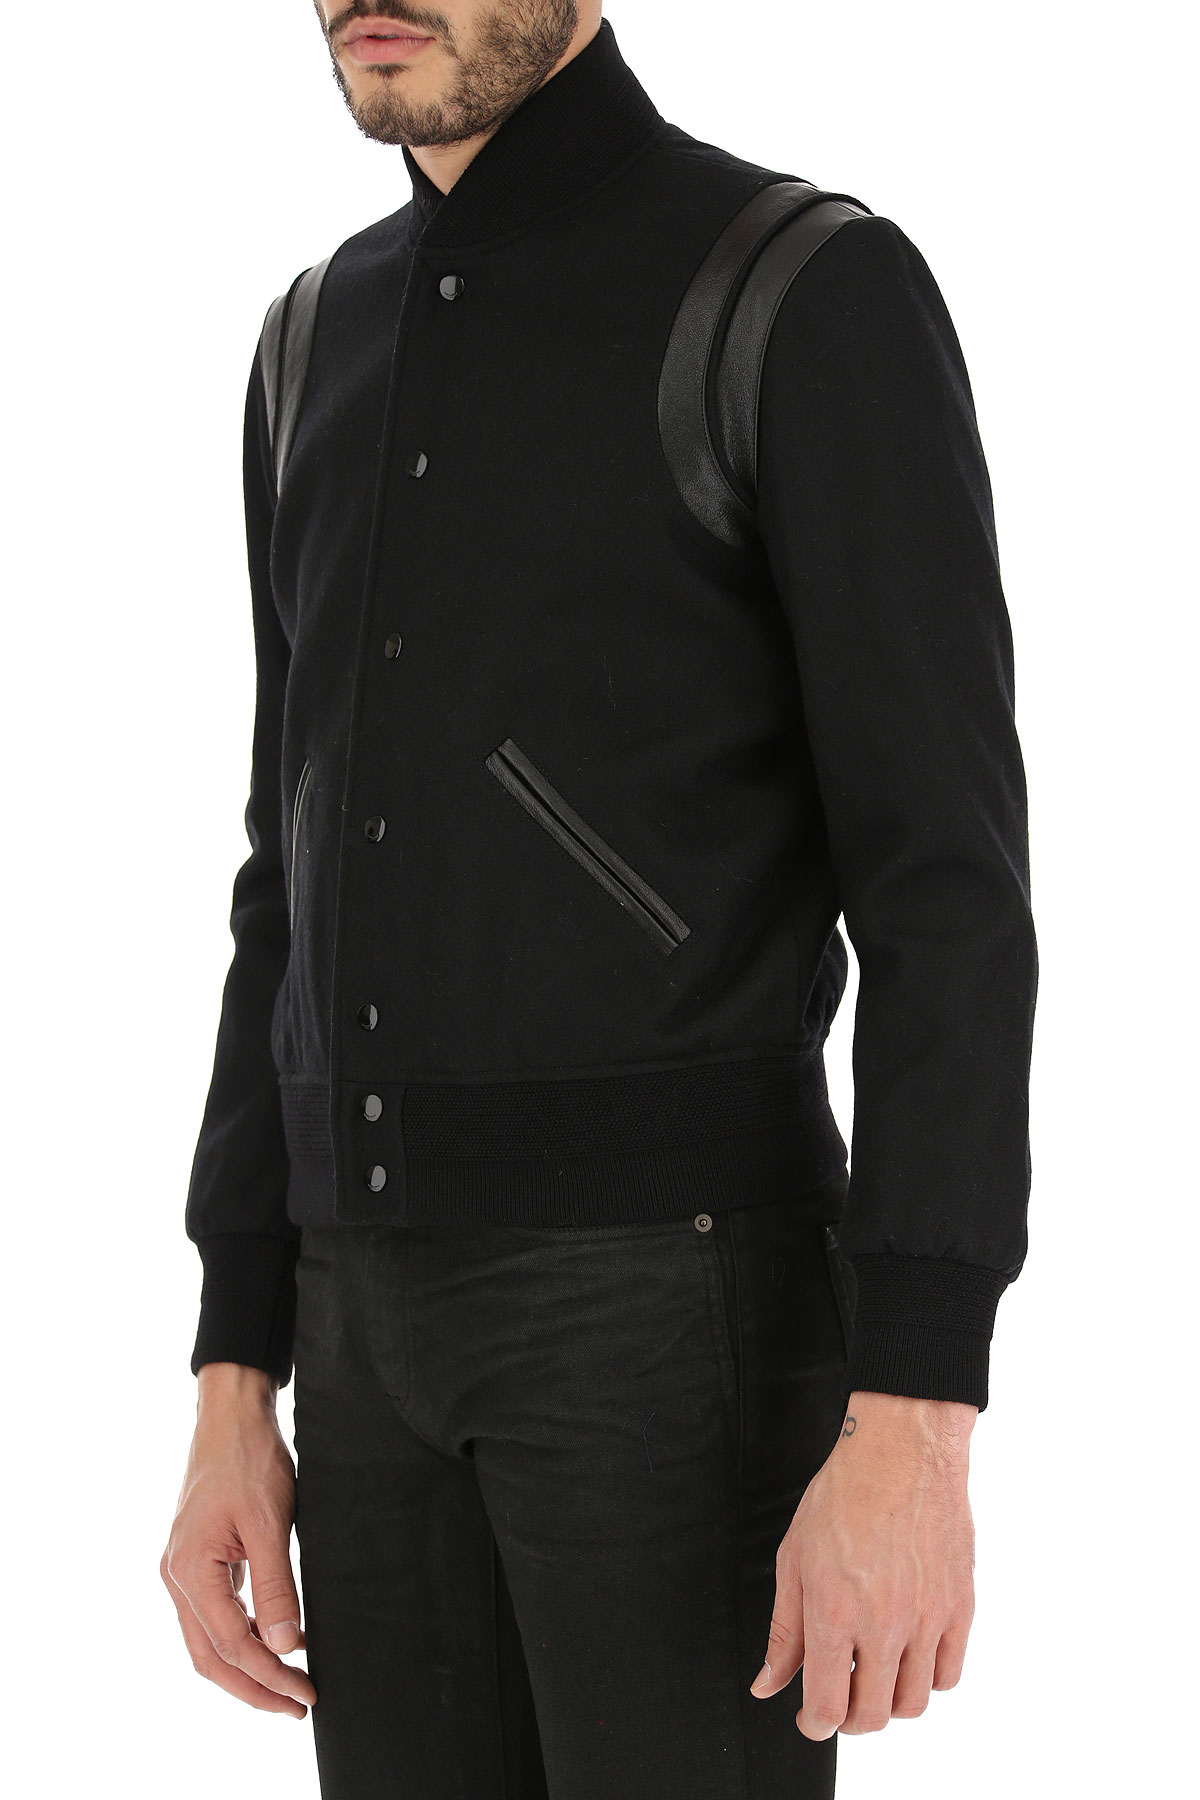 Mens Clothing Yves Saint Laurent, Style code: 354718-y197q-1000